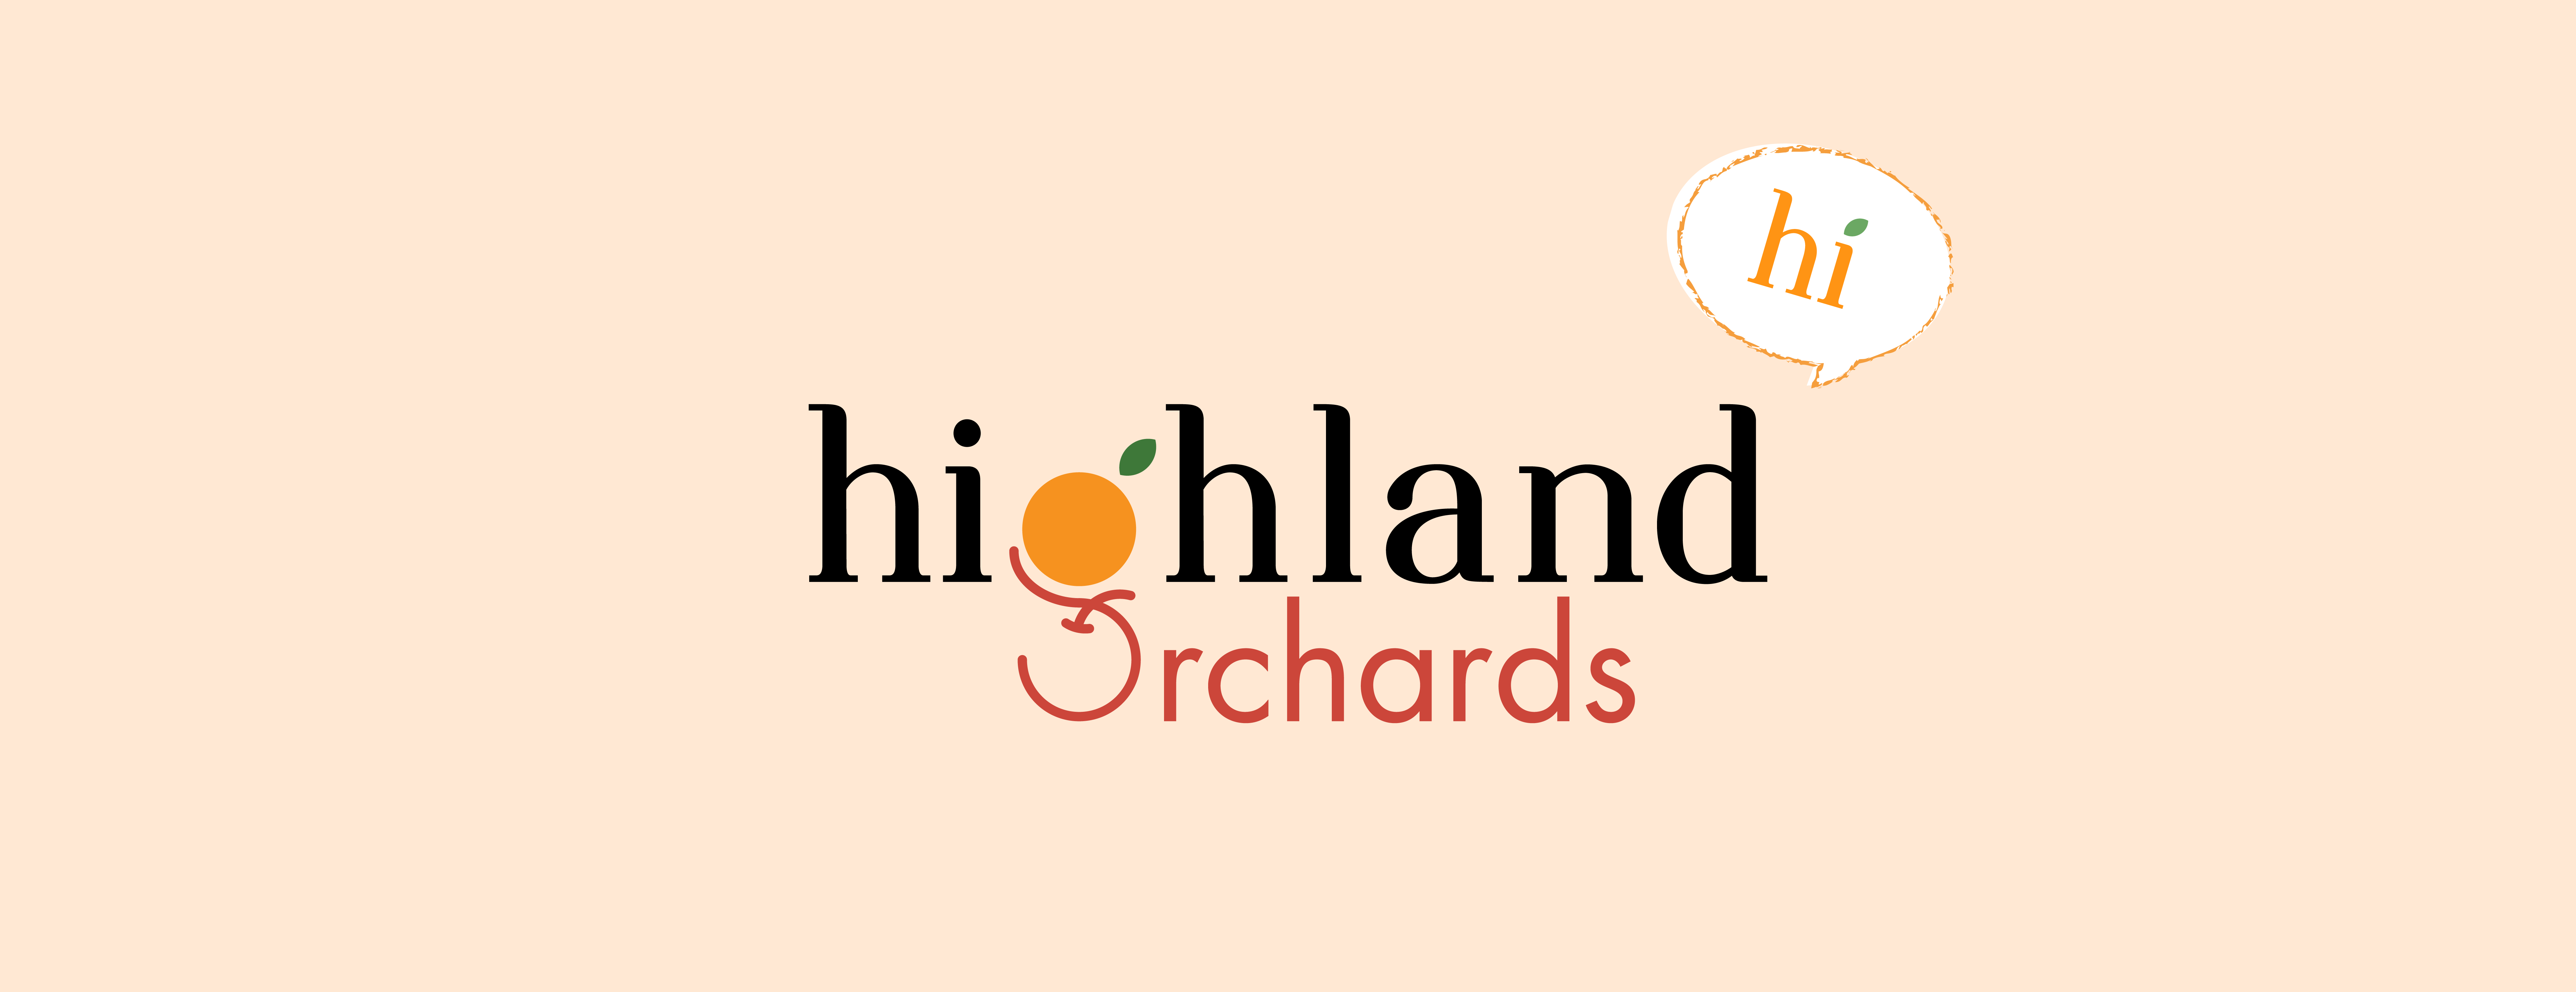 hgihland orchards logo on a banner